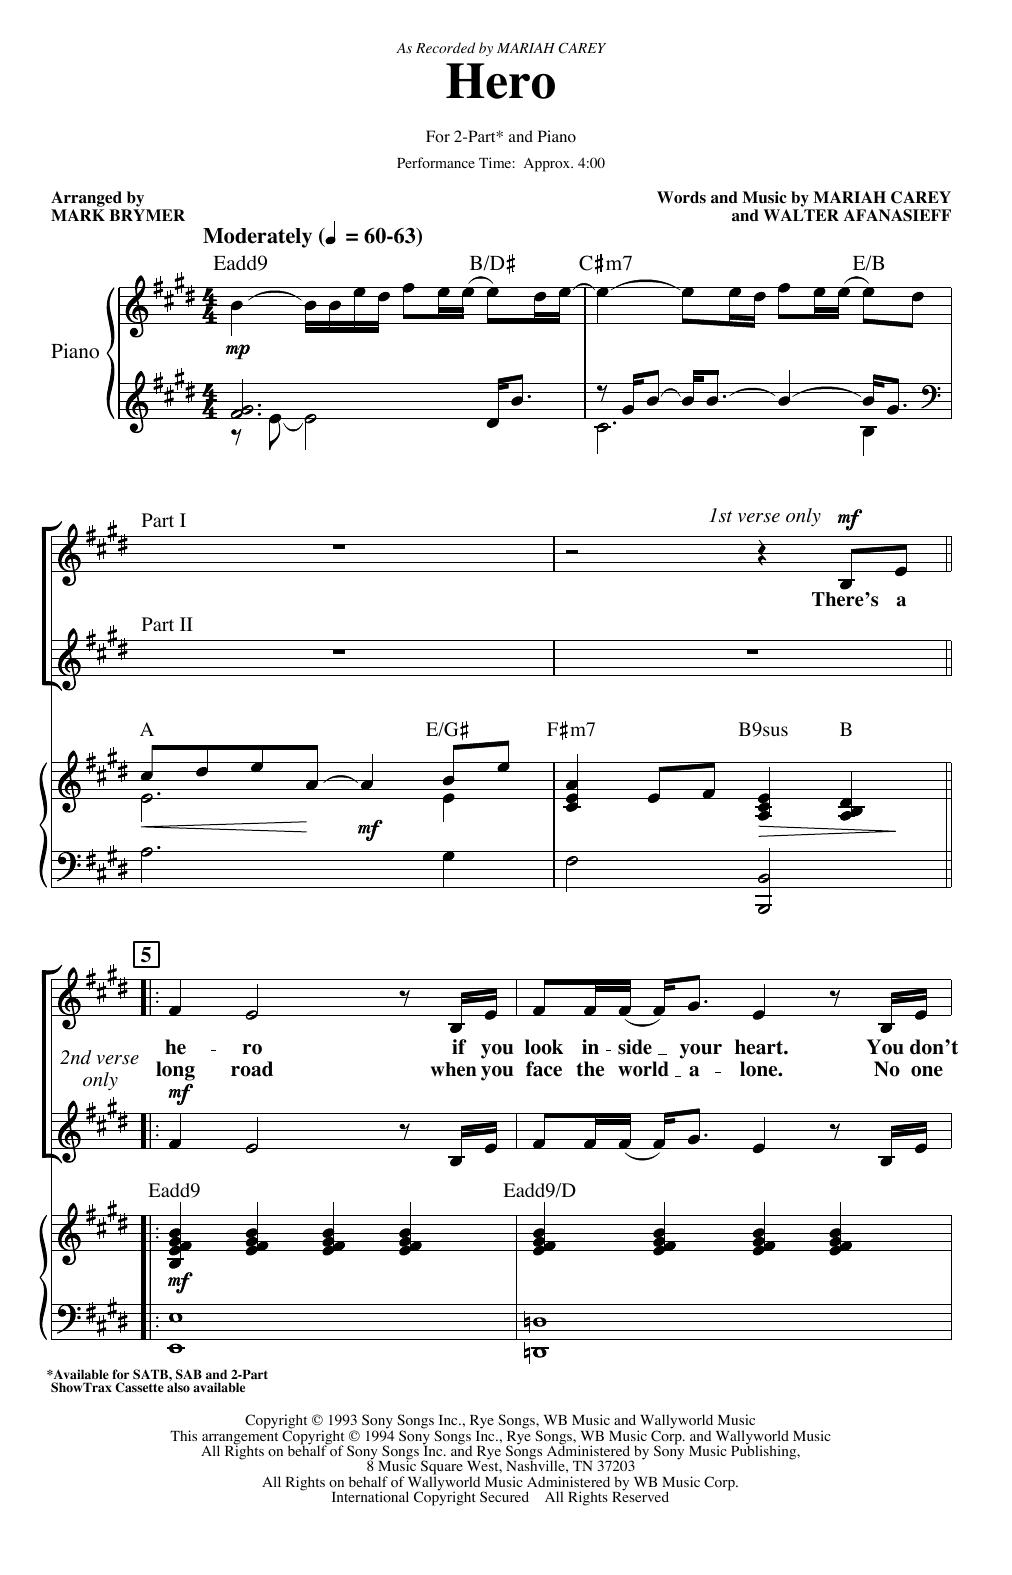 Mariah Carey Hero (arr. Mark Brymer) Sheet Music Notes & Chords for SAB Choir - Download or Print PDF